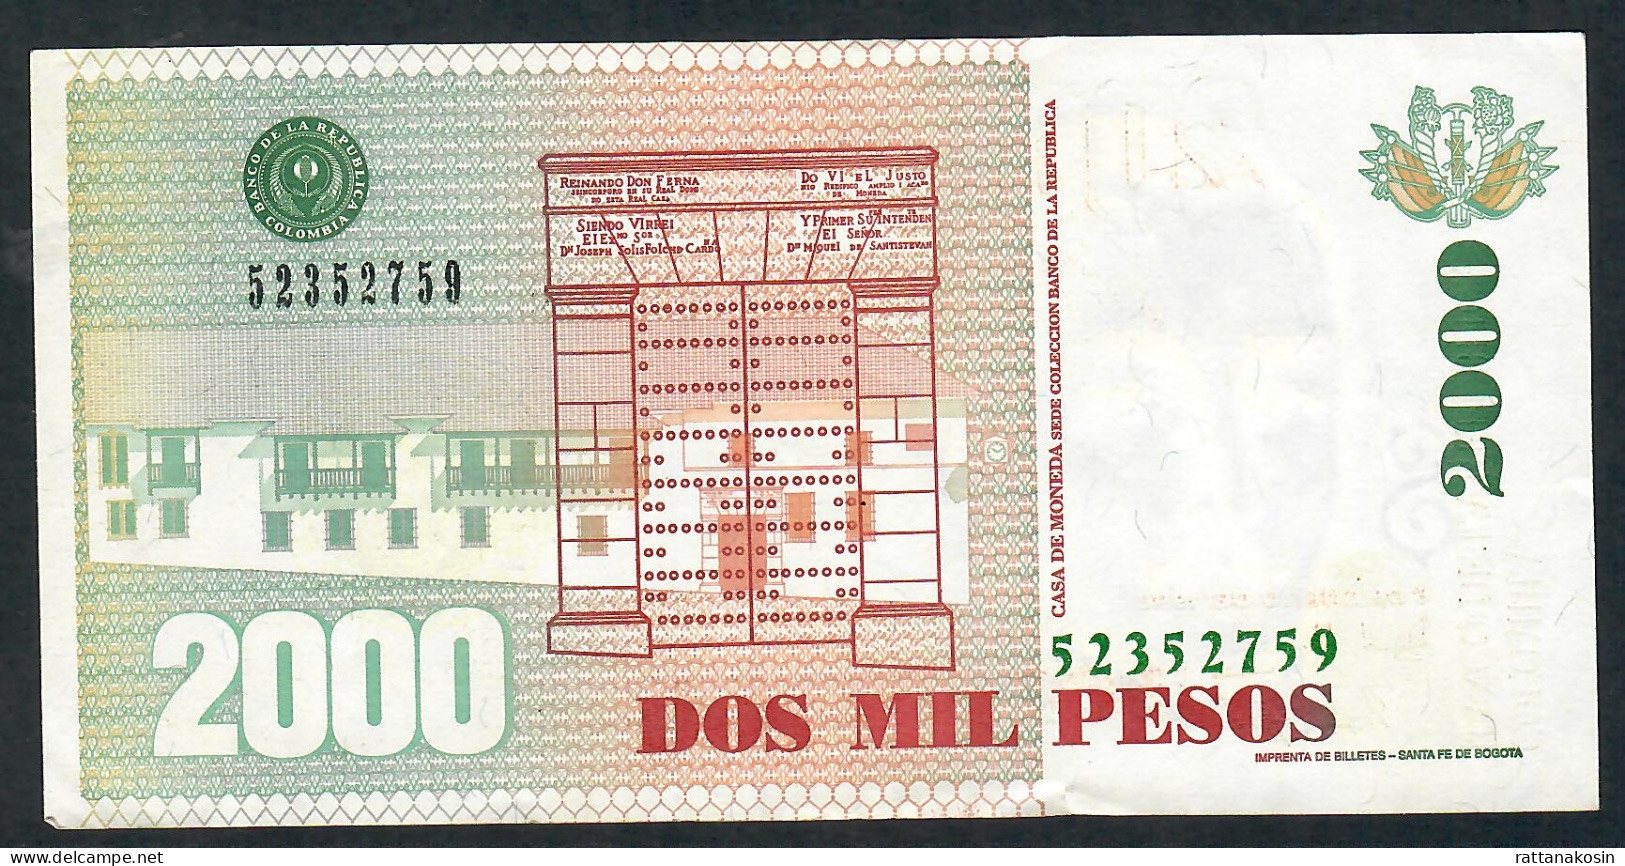 COLOMBIA P445c 2000 PESOS  6.1.1998      FINE  NO P.h. - Colombia